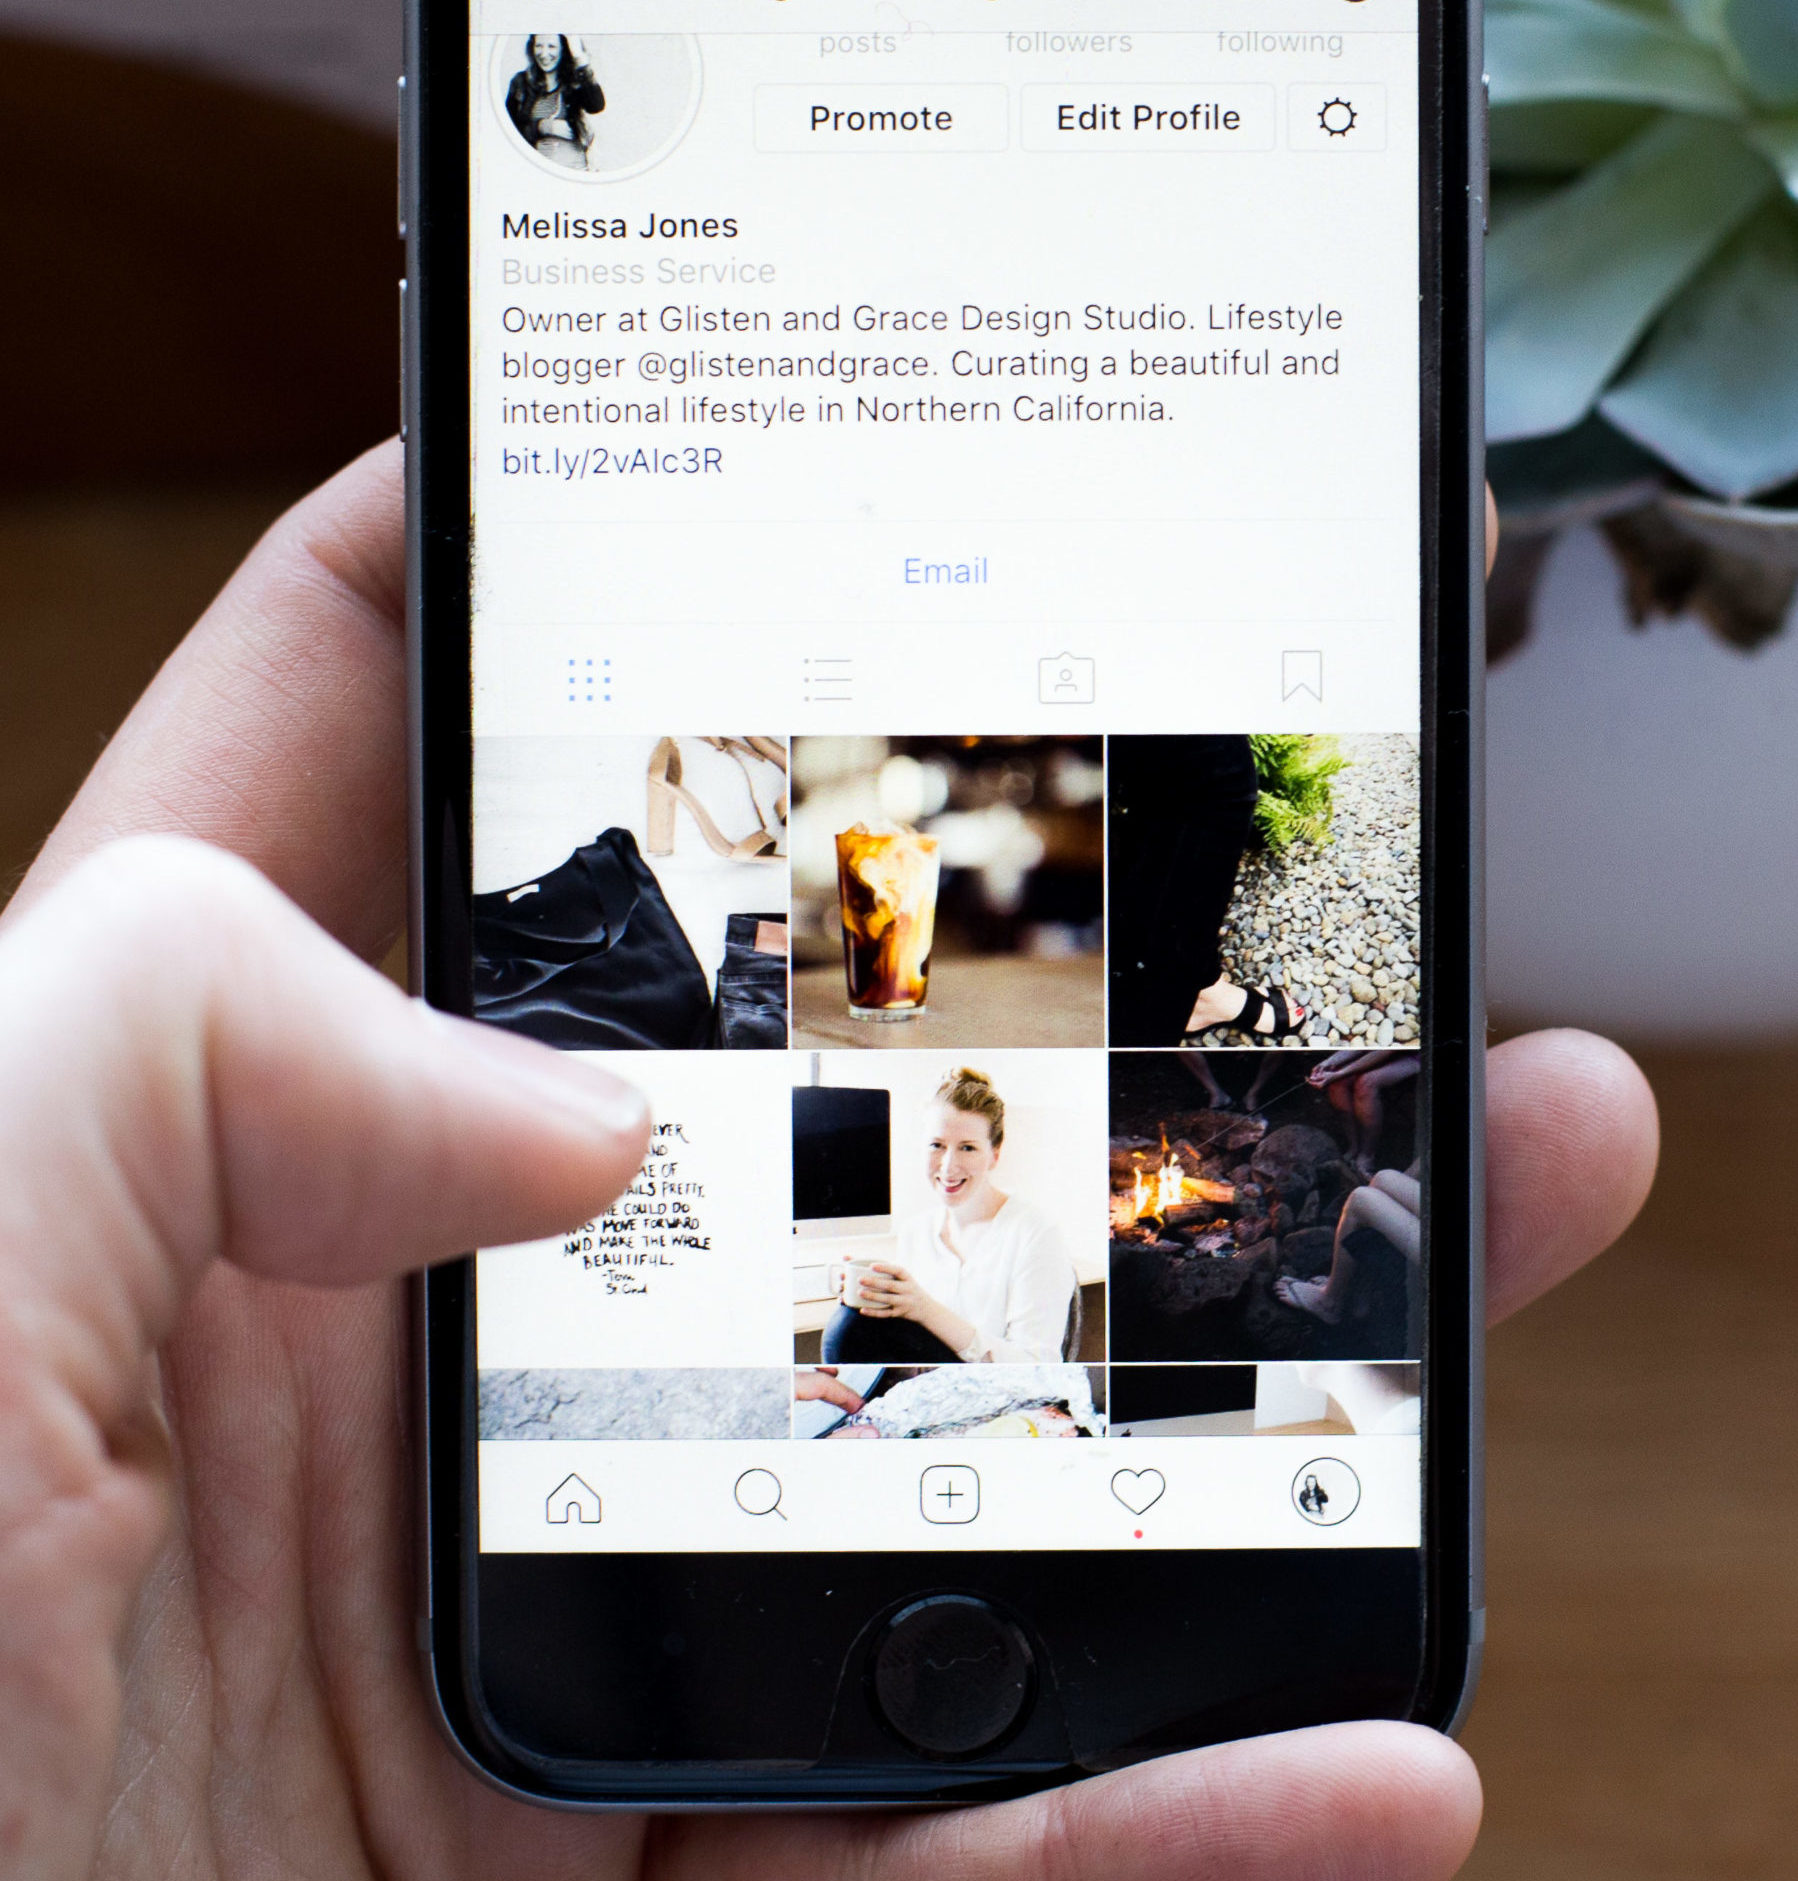 Phone shows instagram profile of web designer in Northern California